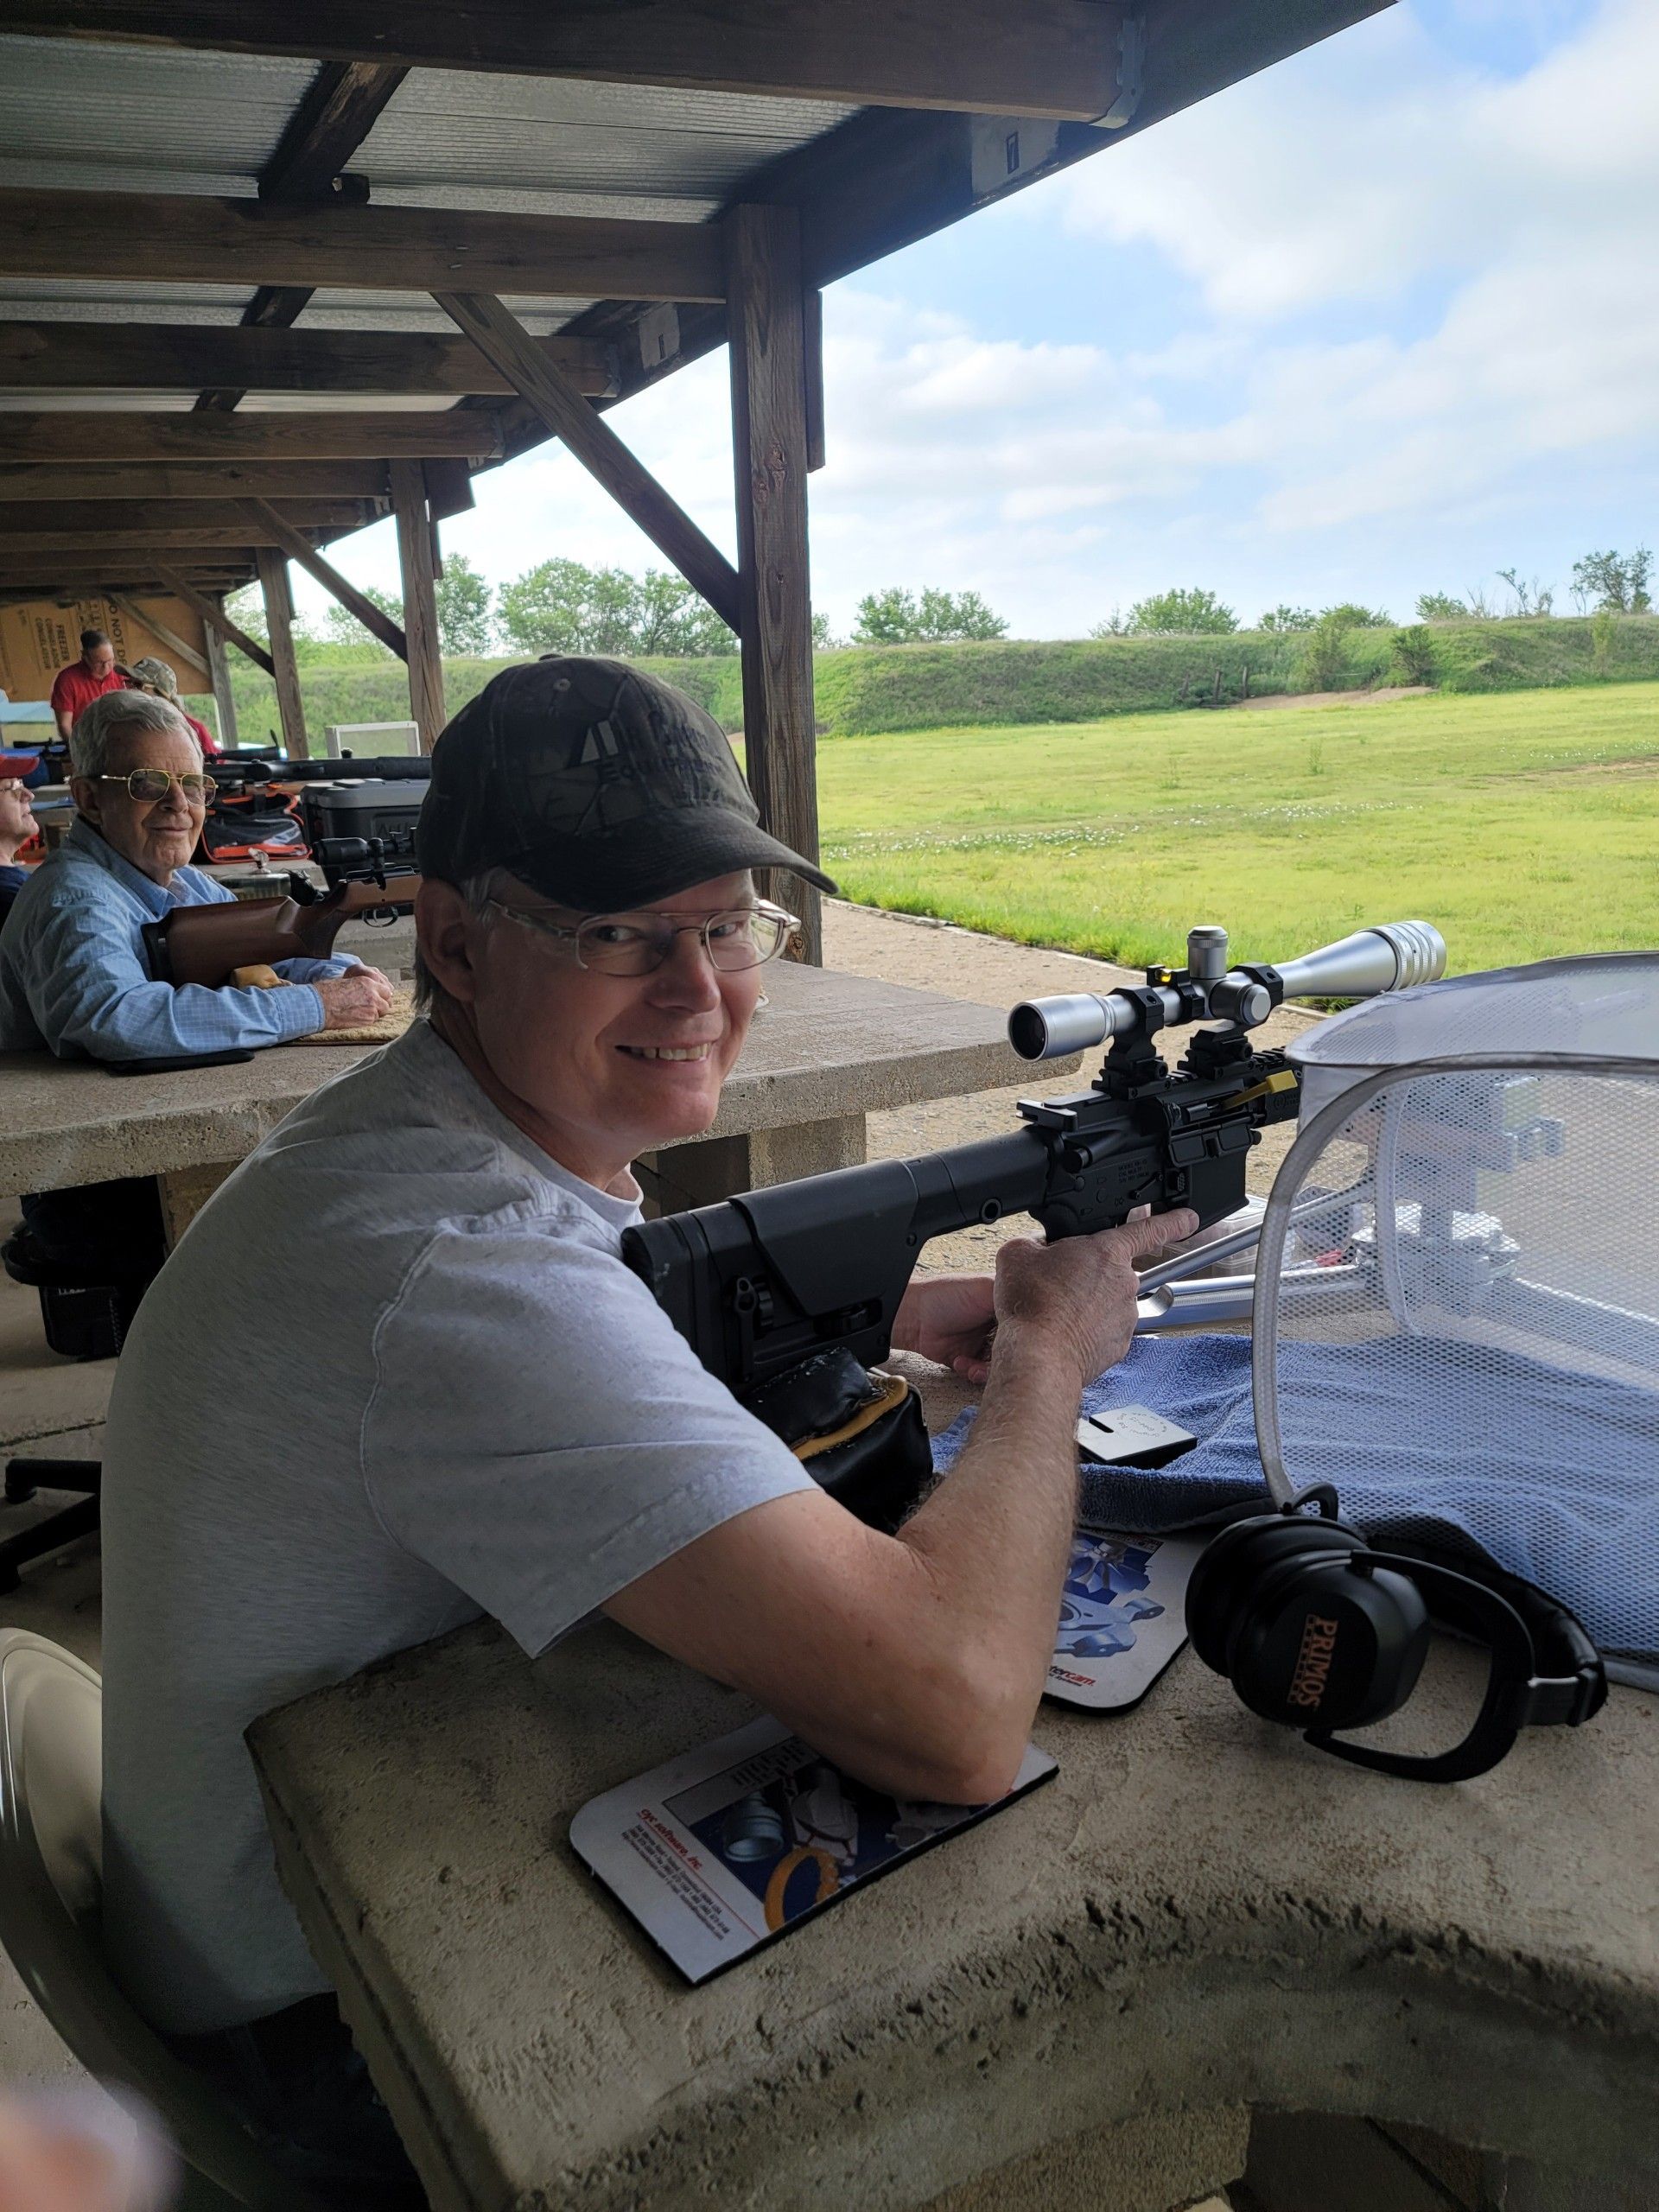 man in glasses and black hat smiling at camera sitting at gun range holding a rifle